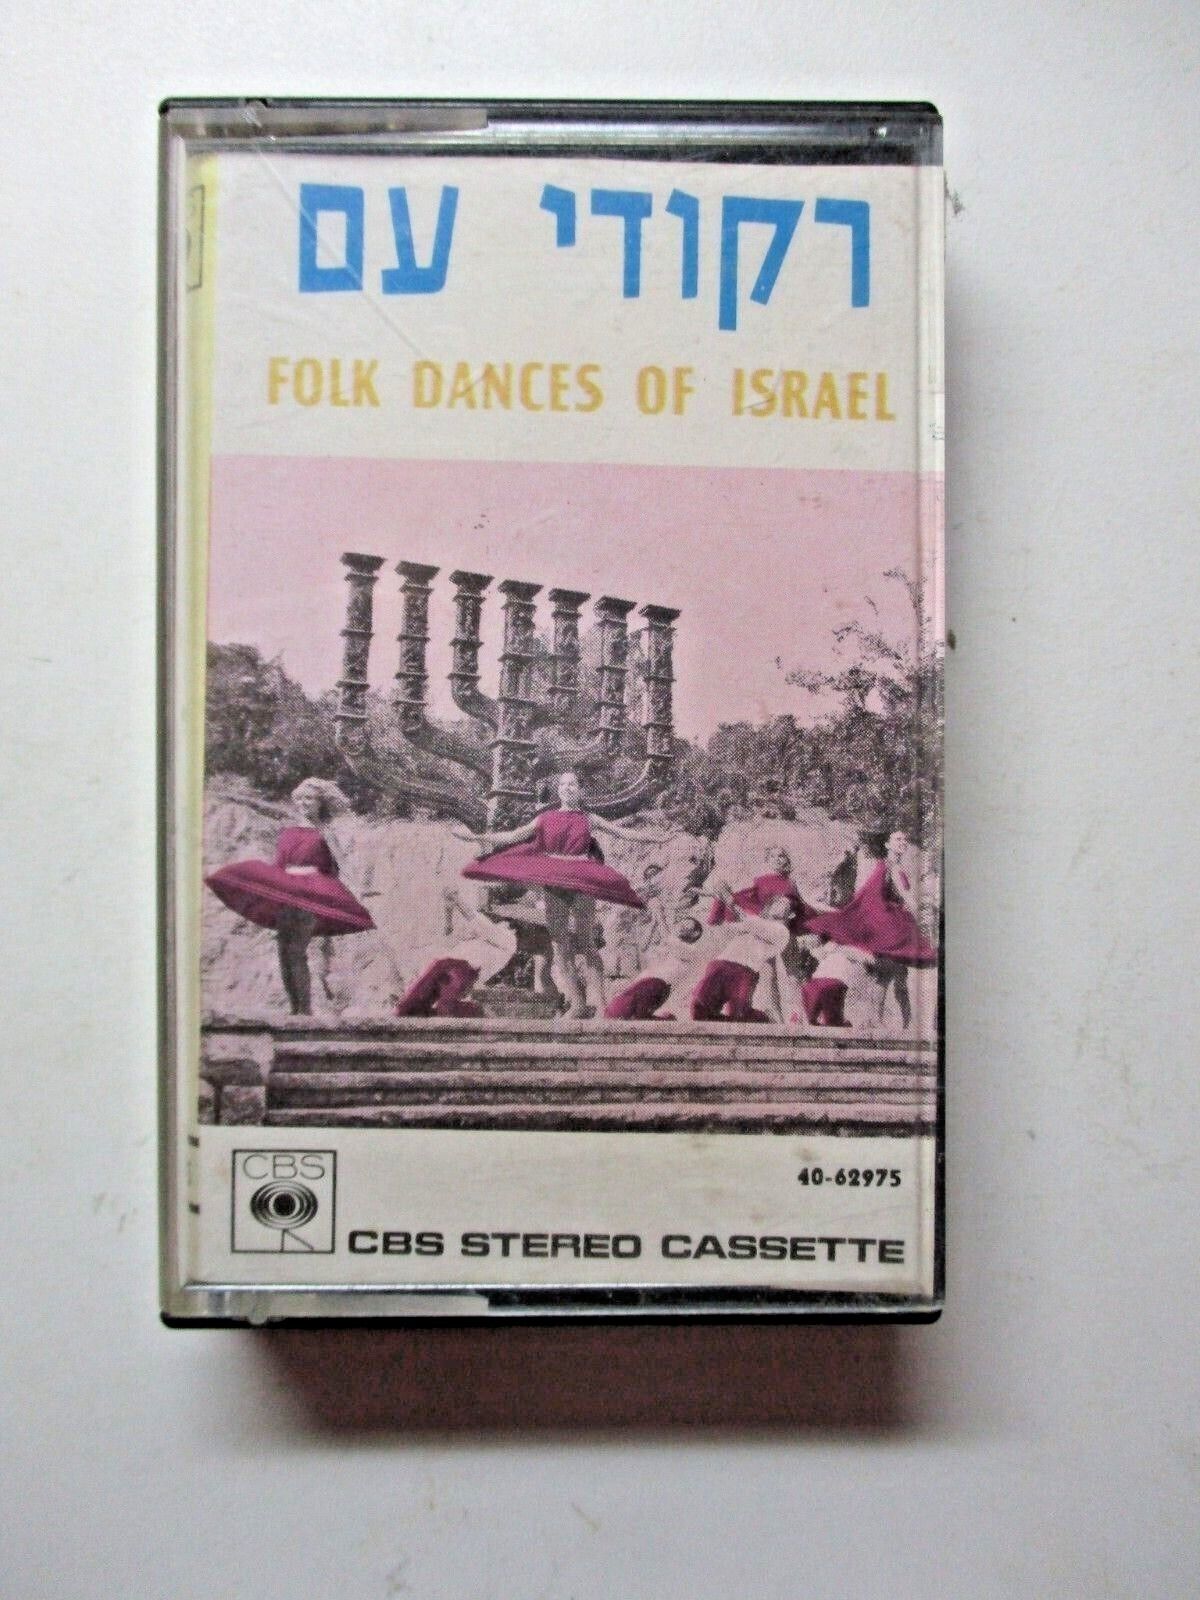 Israel Folk Dances Cassette Tape Stereo CBS 40-62975 Hebrew Jewish Vintage